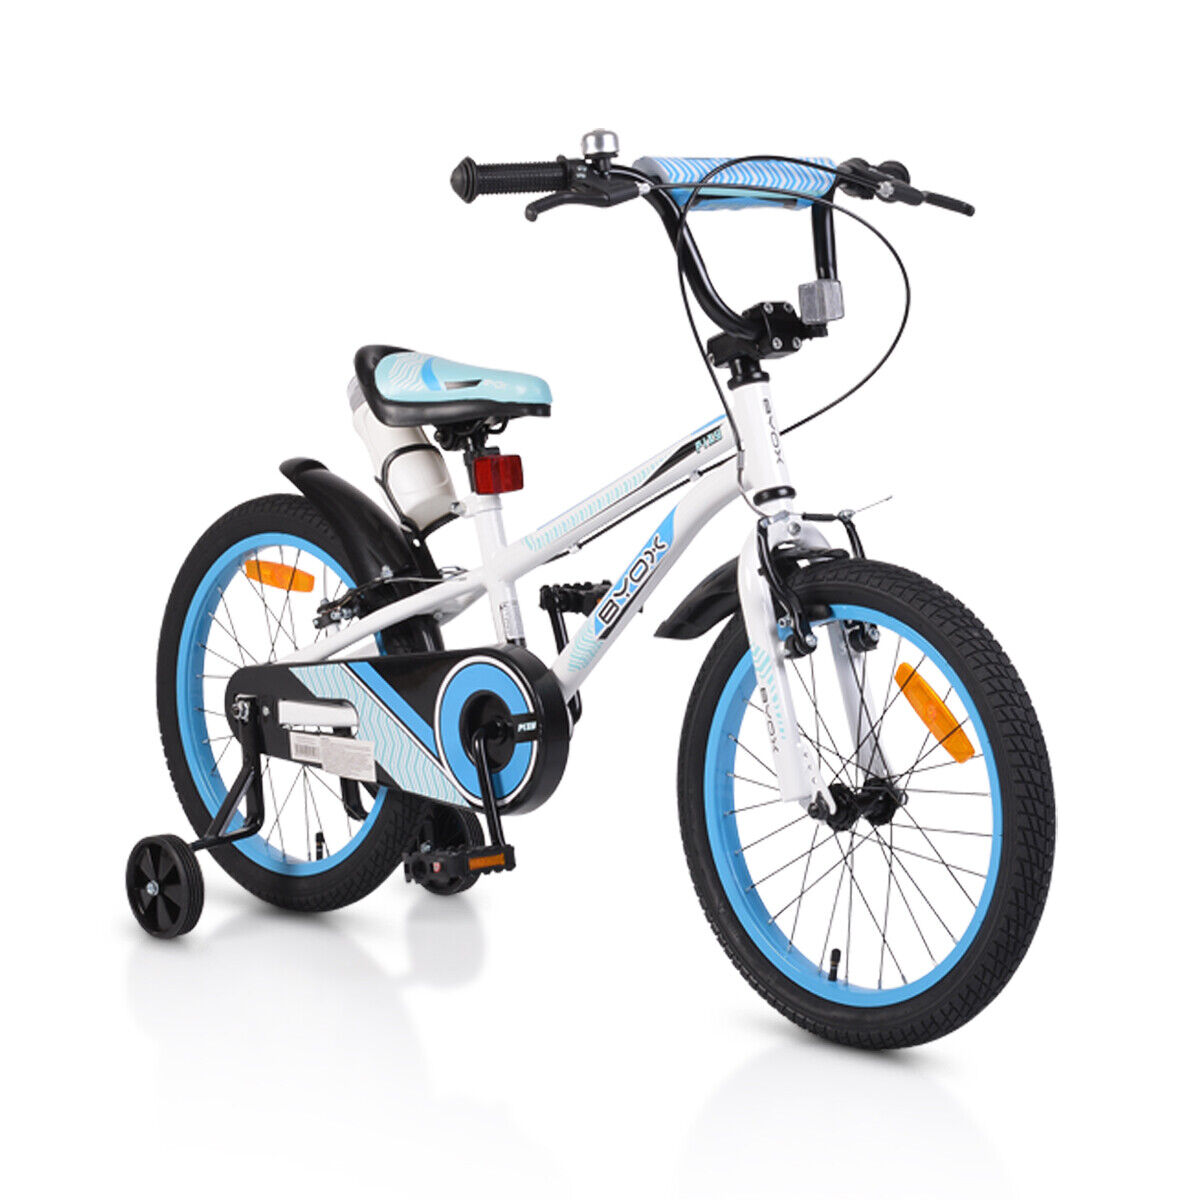 Byox children's bike 18-inch pixi, bell, reflectors, support